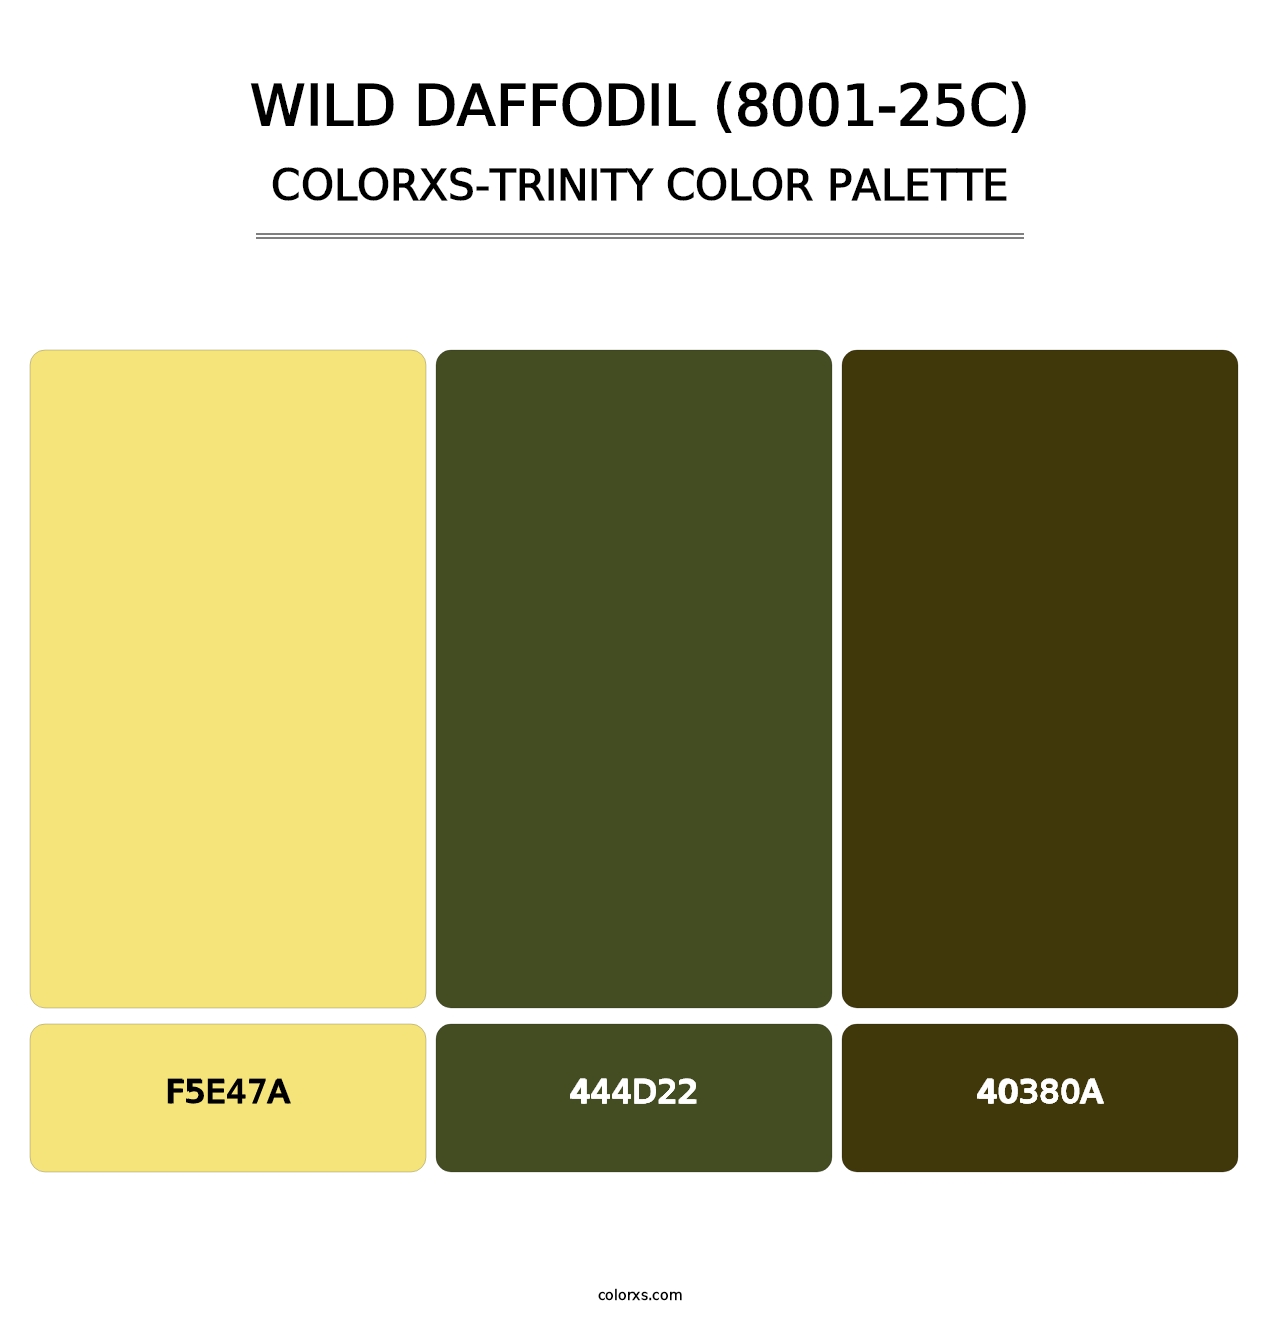 Wild Daffodil (8001-25C) - Colorxs Trinity Palette